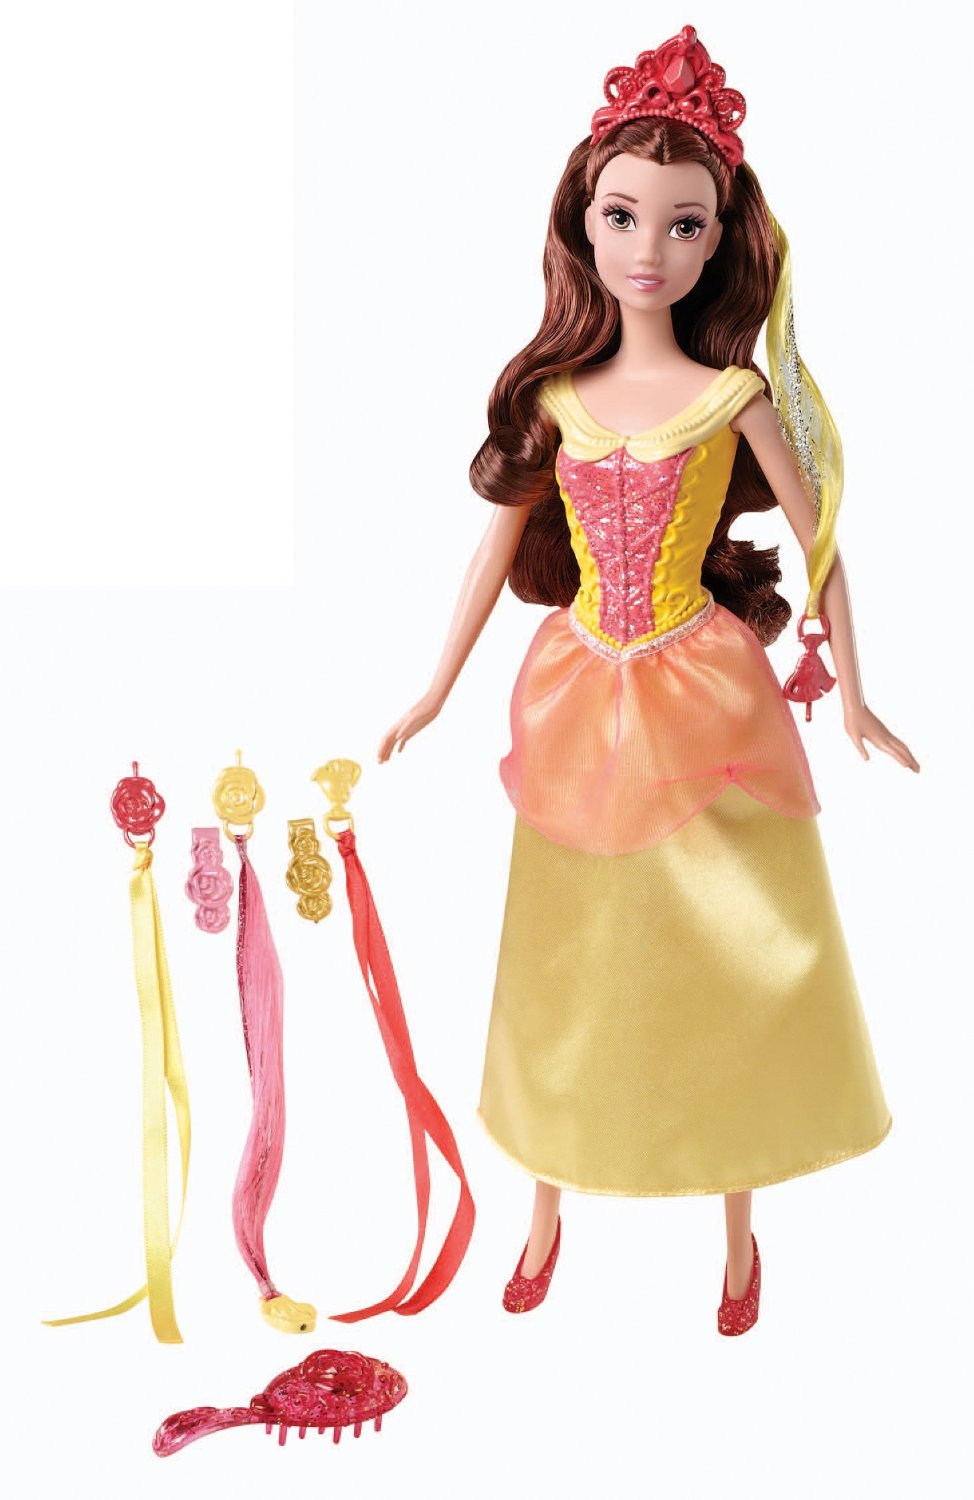 HUGE Discounts on Disney Princess Dolls!